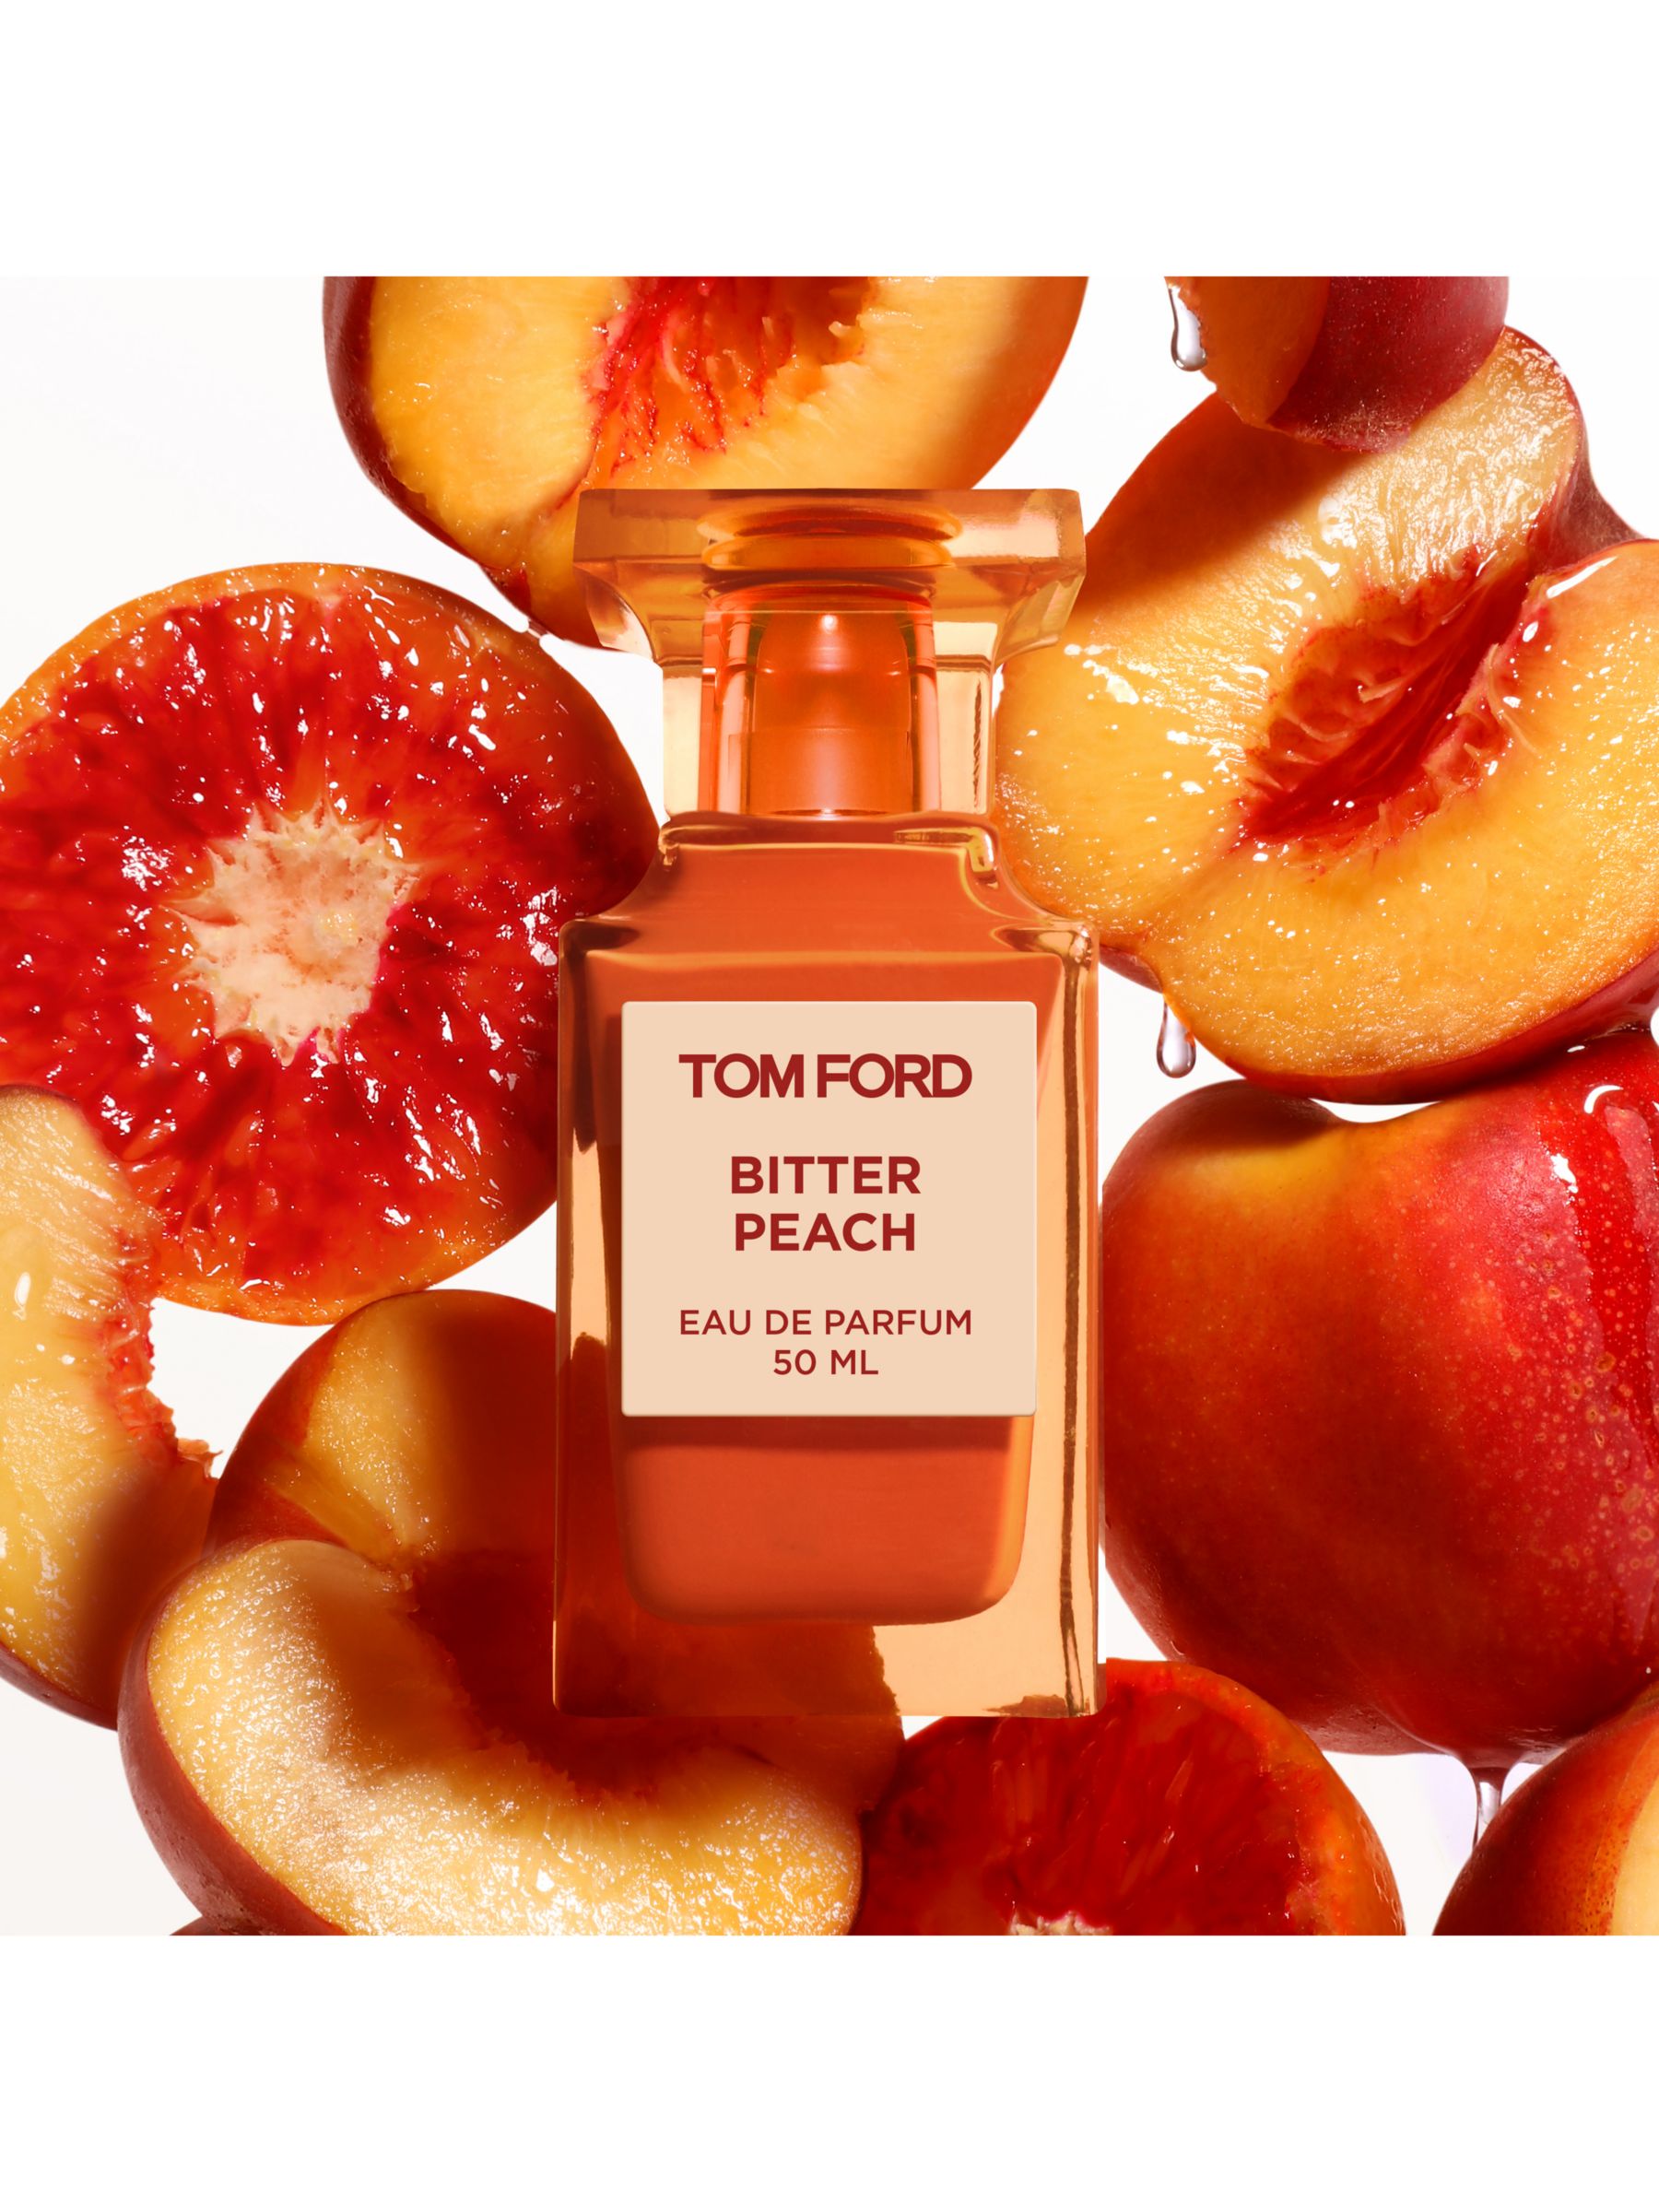 TOM FORD Private Blend Bitter Peach Eau de Parfum, 50ml 2